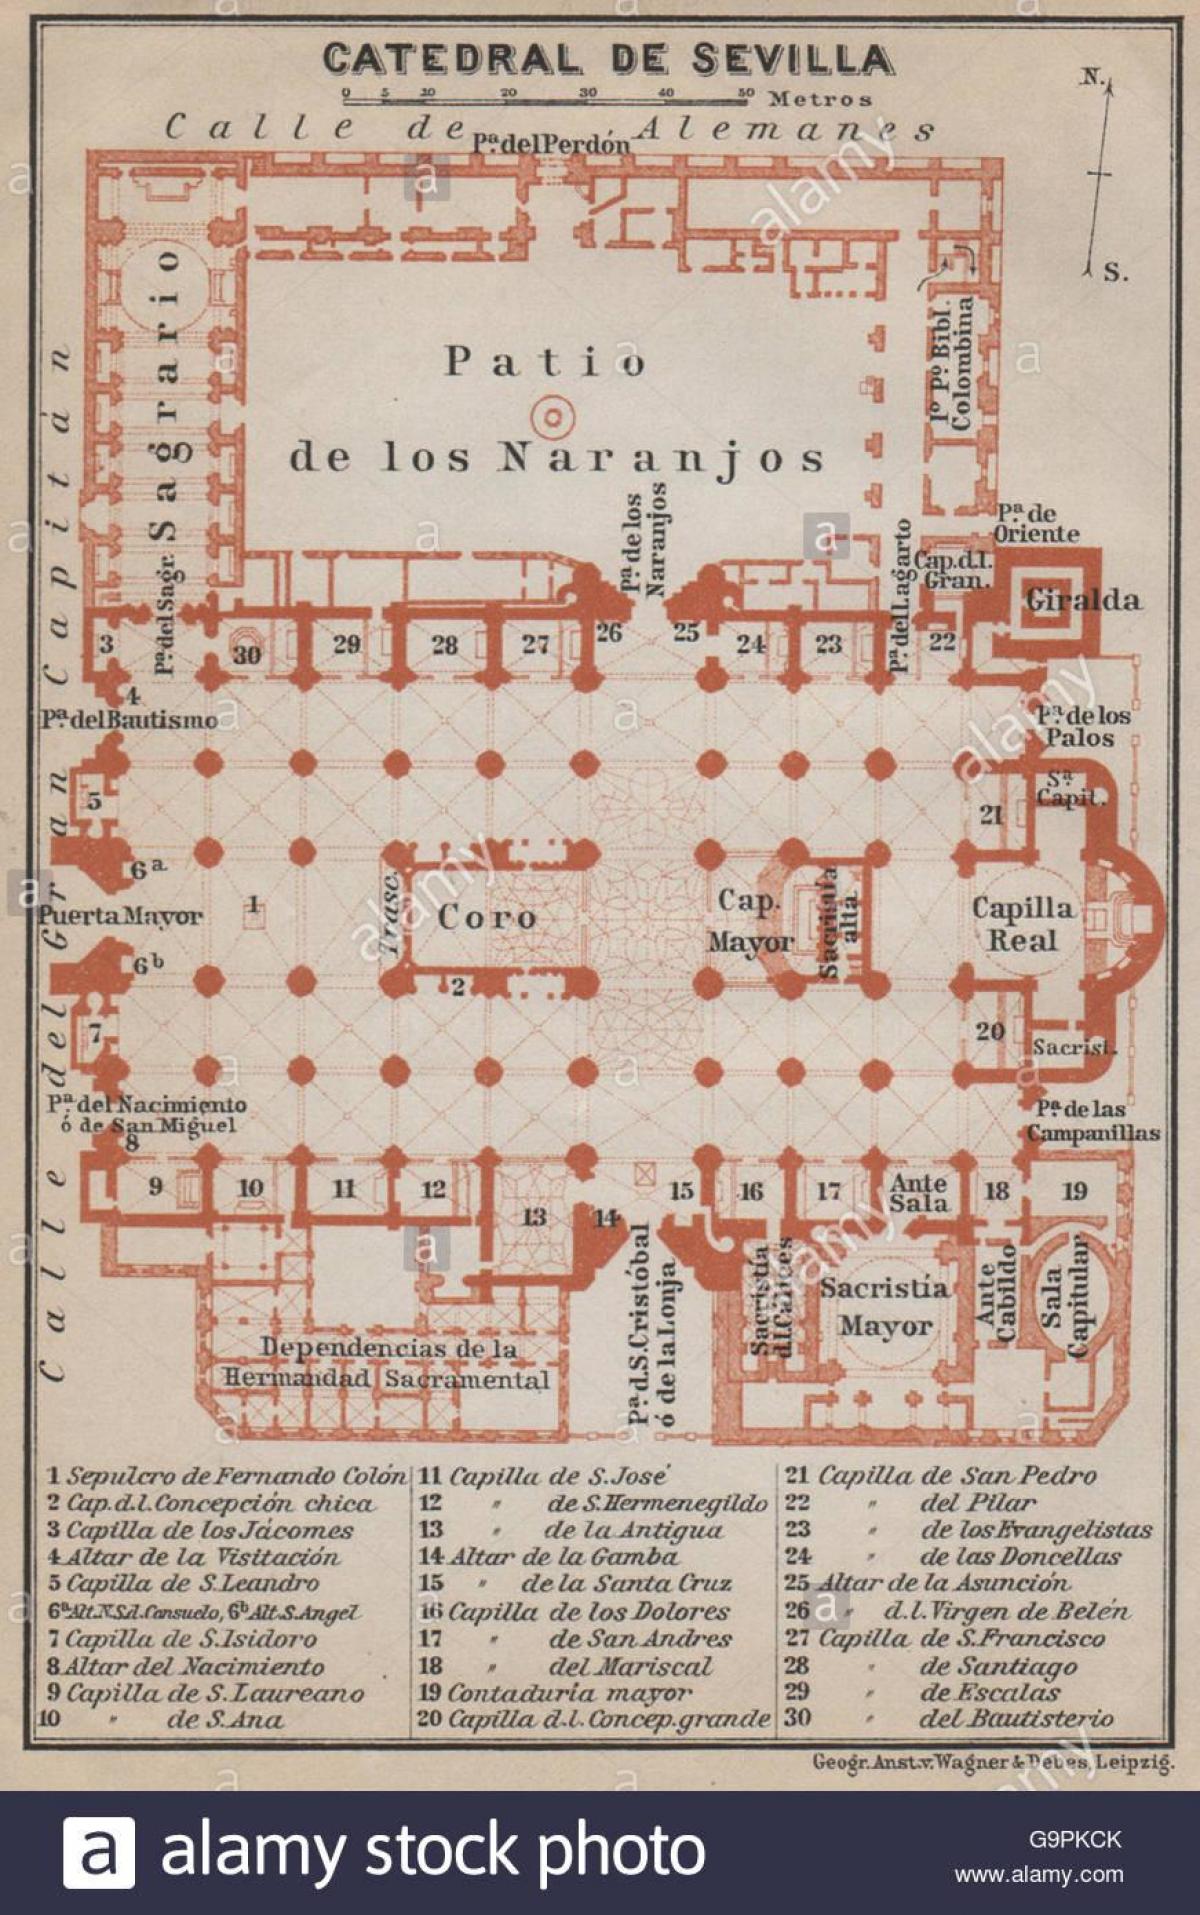 mapa da catedral de Sevilha